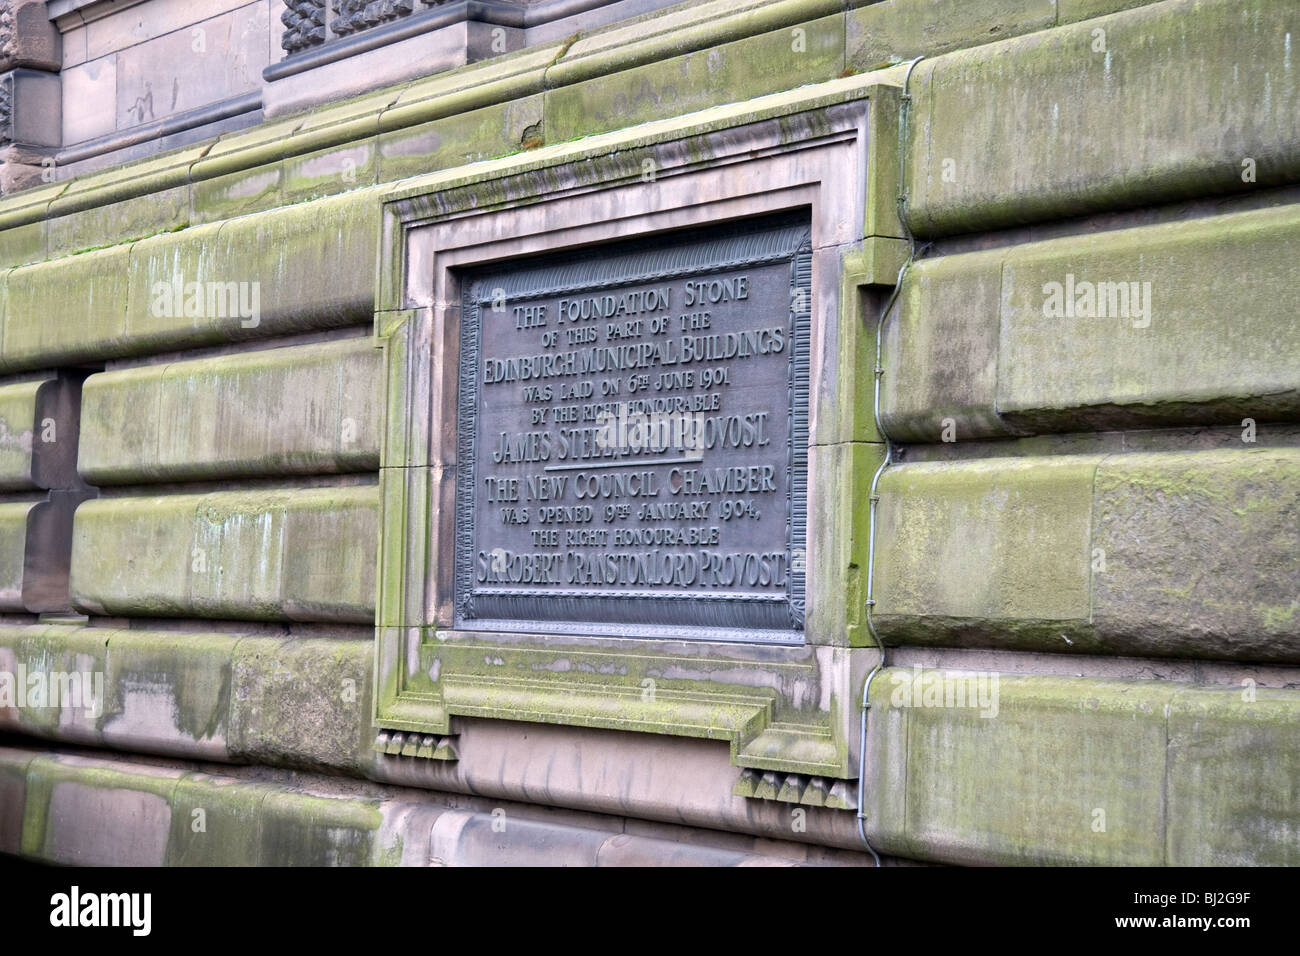 The foundation stone of the Edinburgh Municipal Buildings, now home to Edinburgh Council on Cockburn Street, Edinburgh Stock Photo